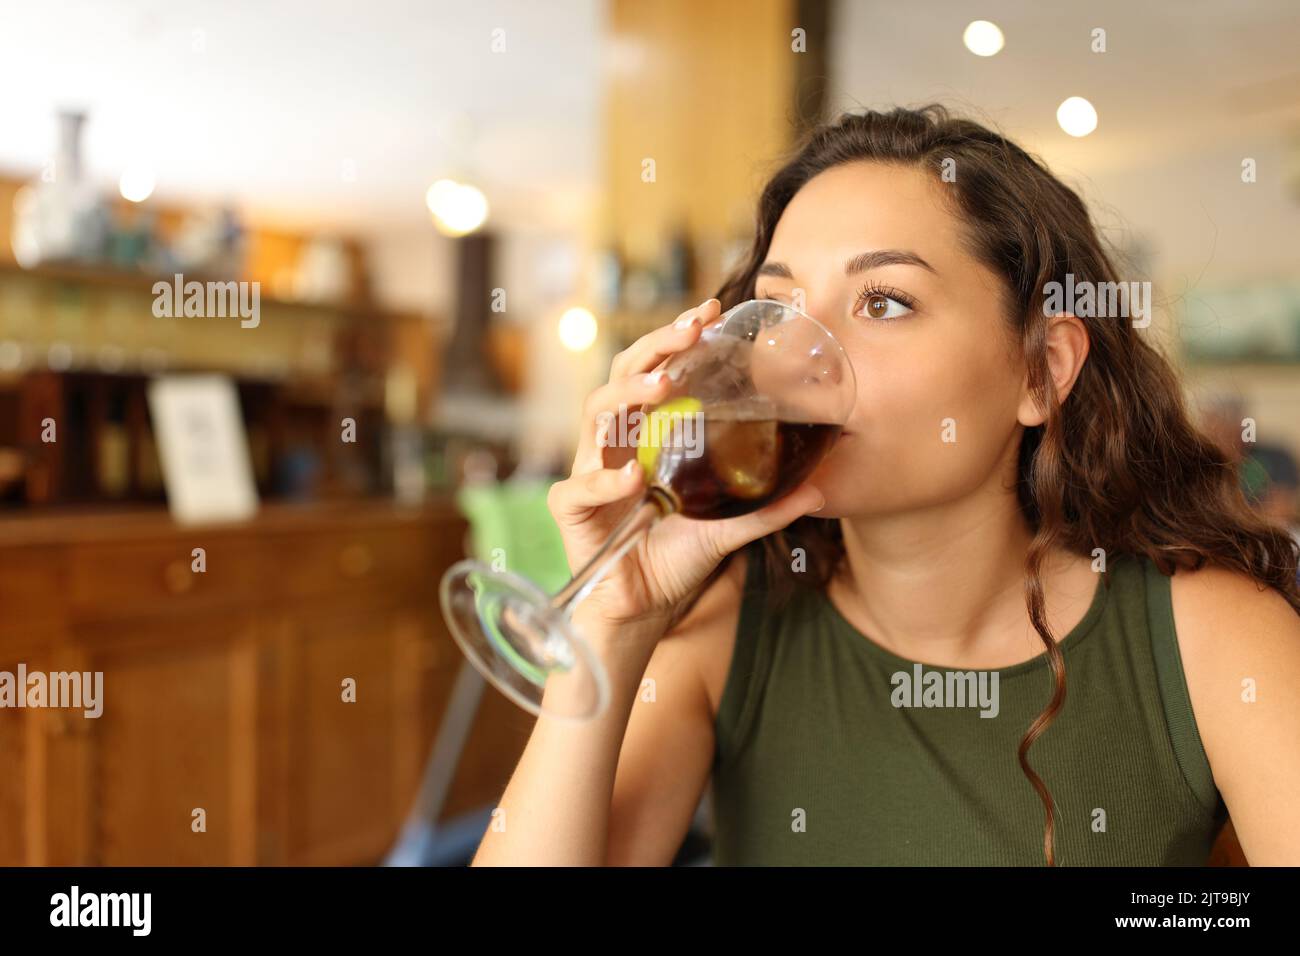 Woman drinking soda refreshment sitting in a restaurant Stock Photo